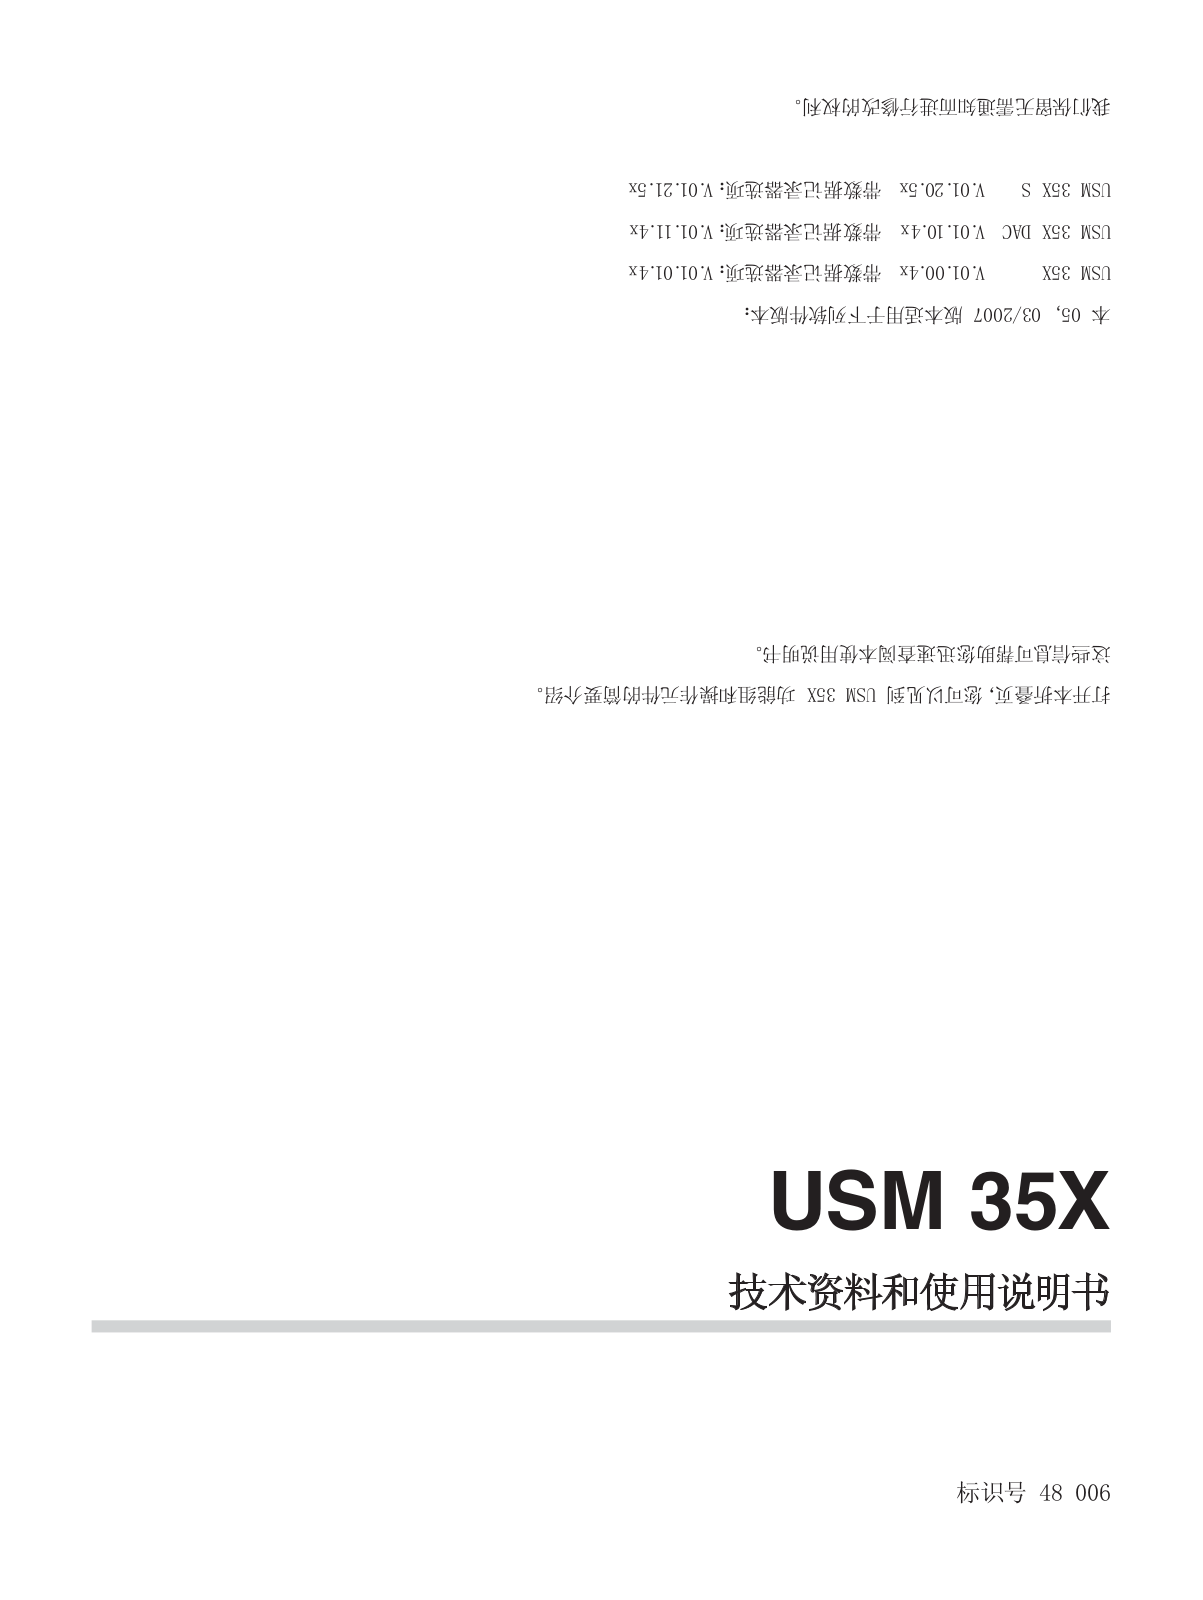 GE USM 35X Operating Manual